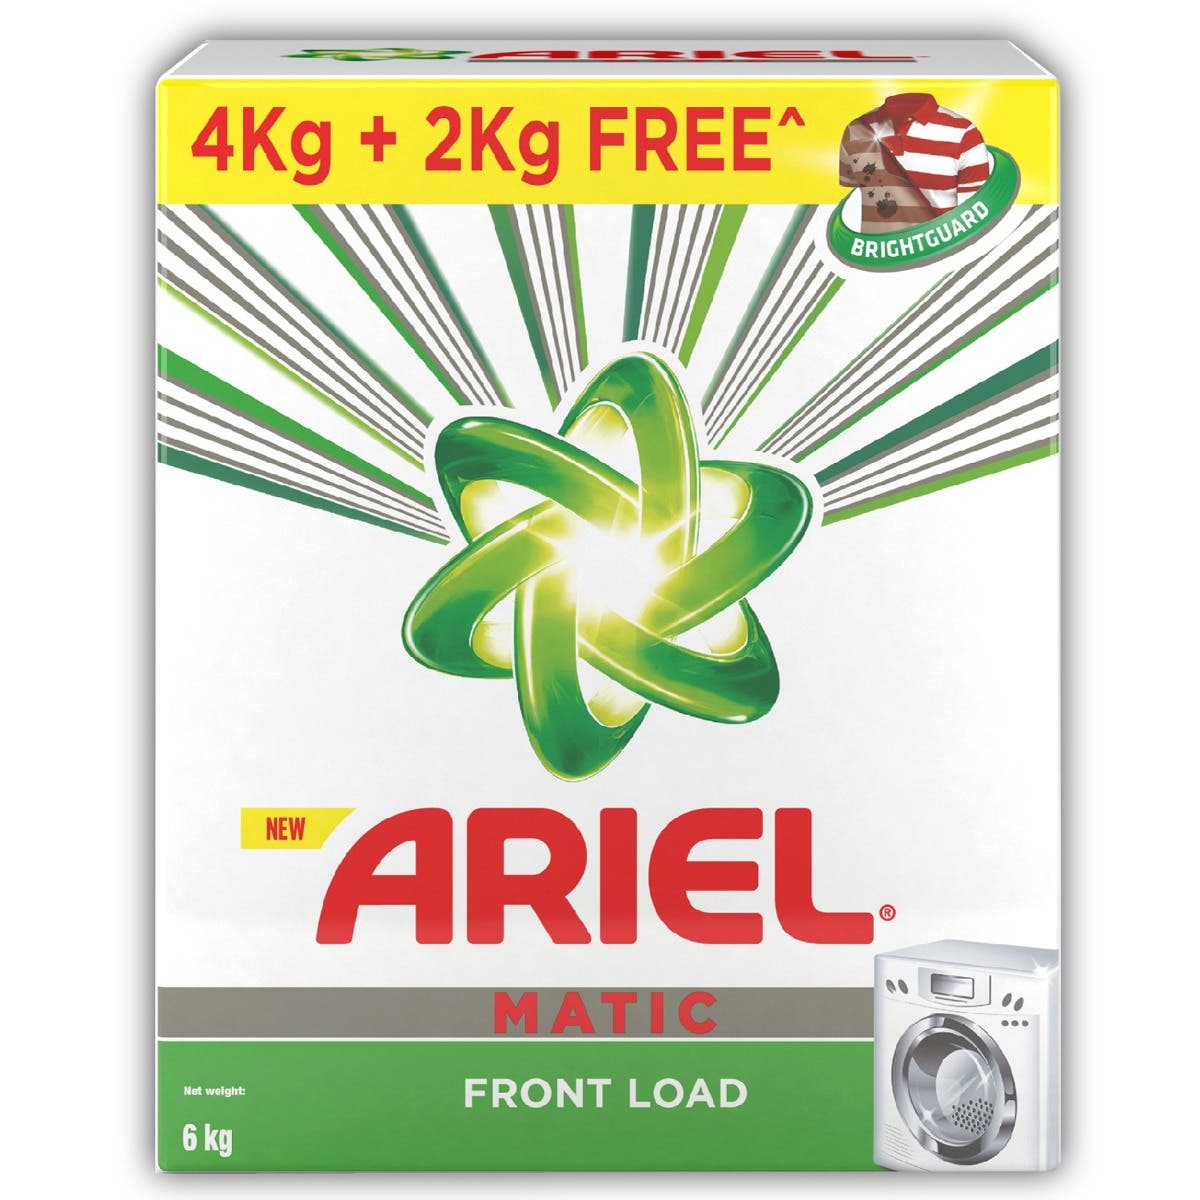 Ariel Matic Front Load Detergent Powder 4Kg+2Kg